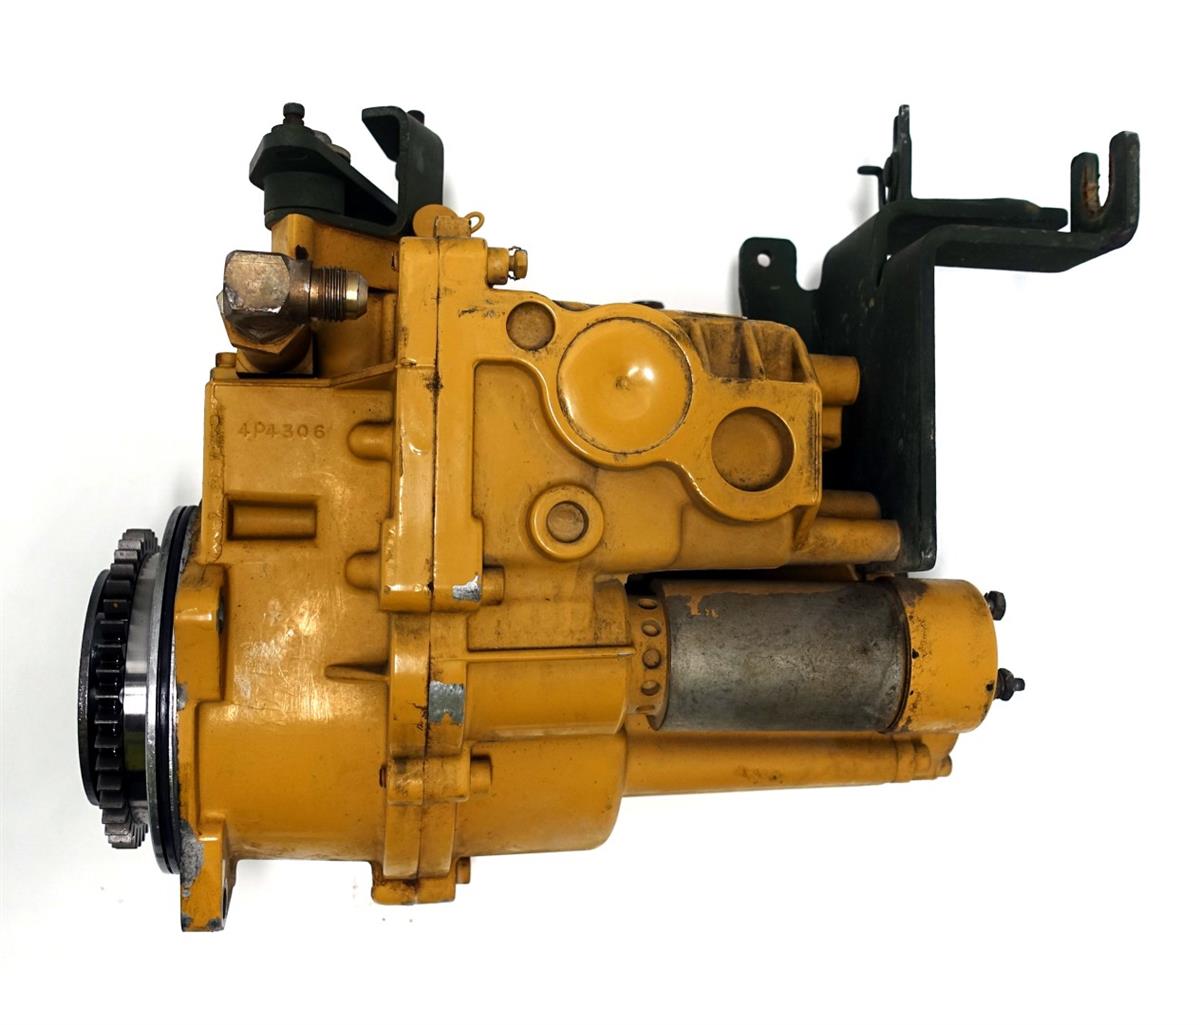 COM-5732  Caterpillar Diesel Engine 3116 Fuel Injection Pump M35A3 FMTV LMTV 